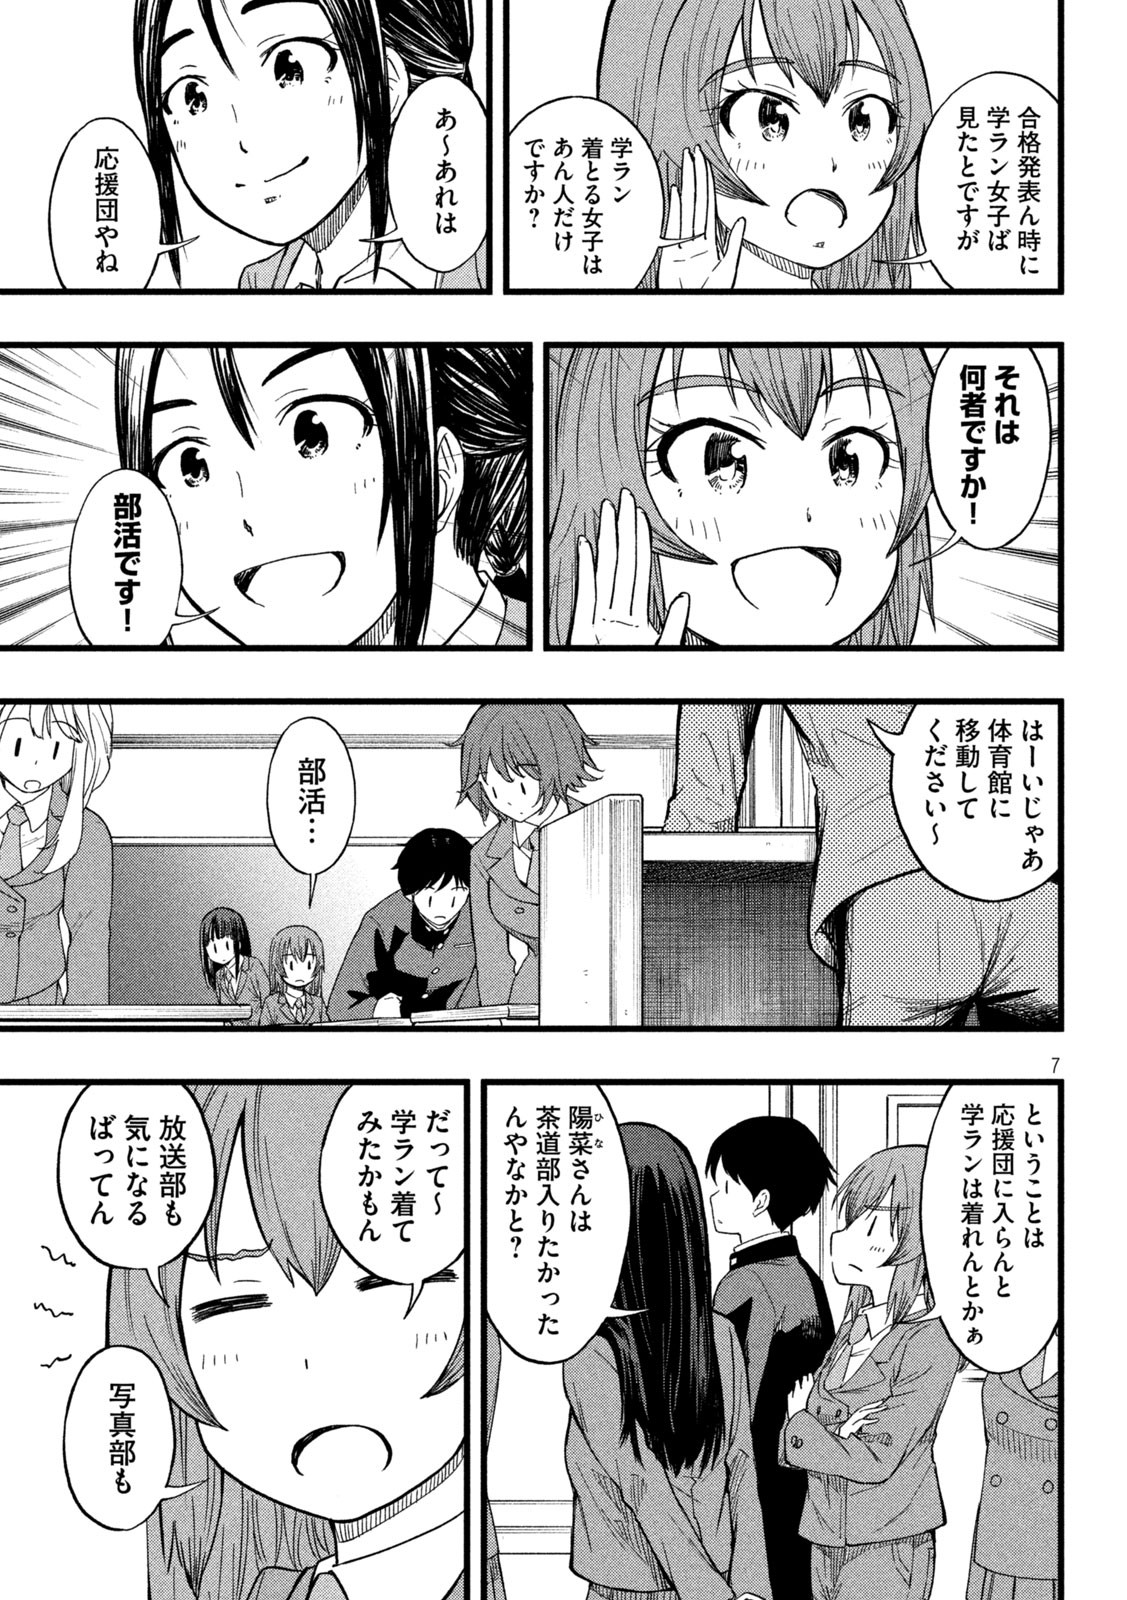 Koharu haru! - Chapter 93 - Page 3